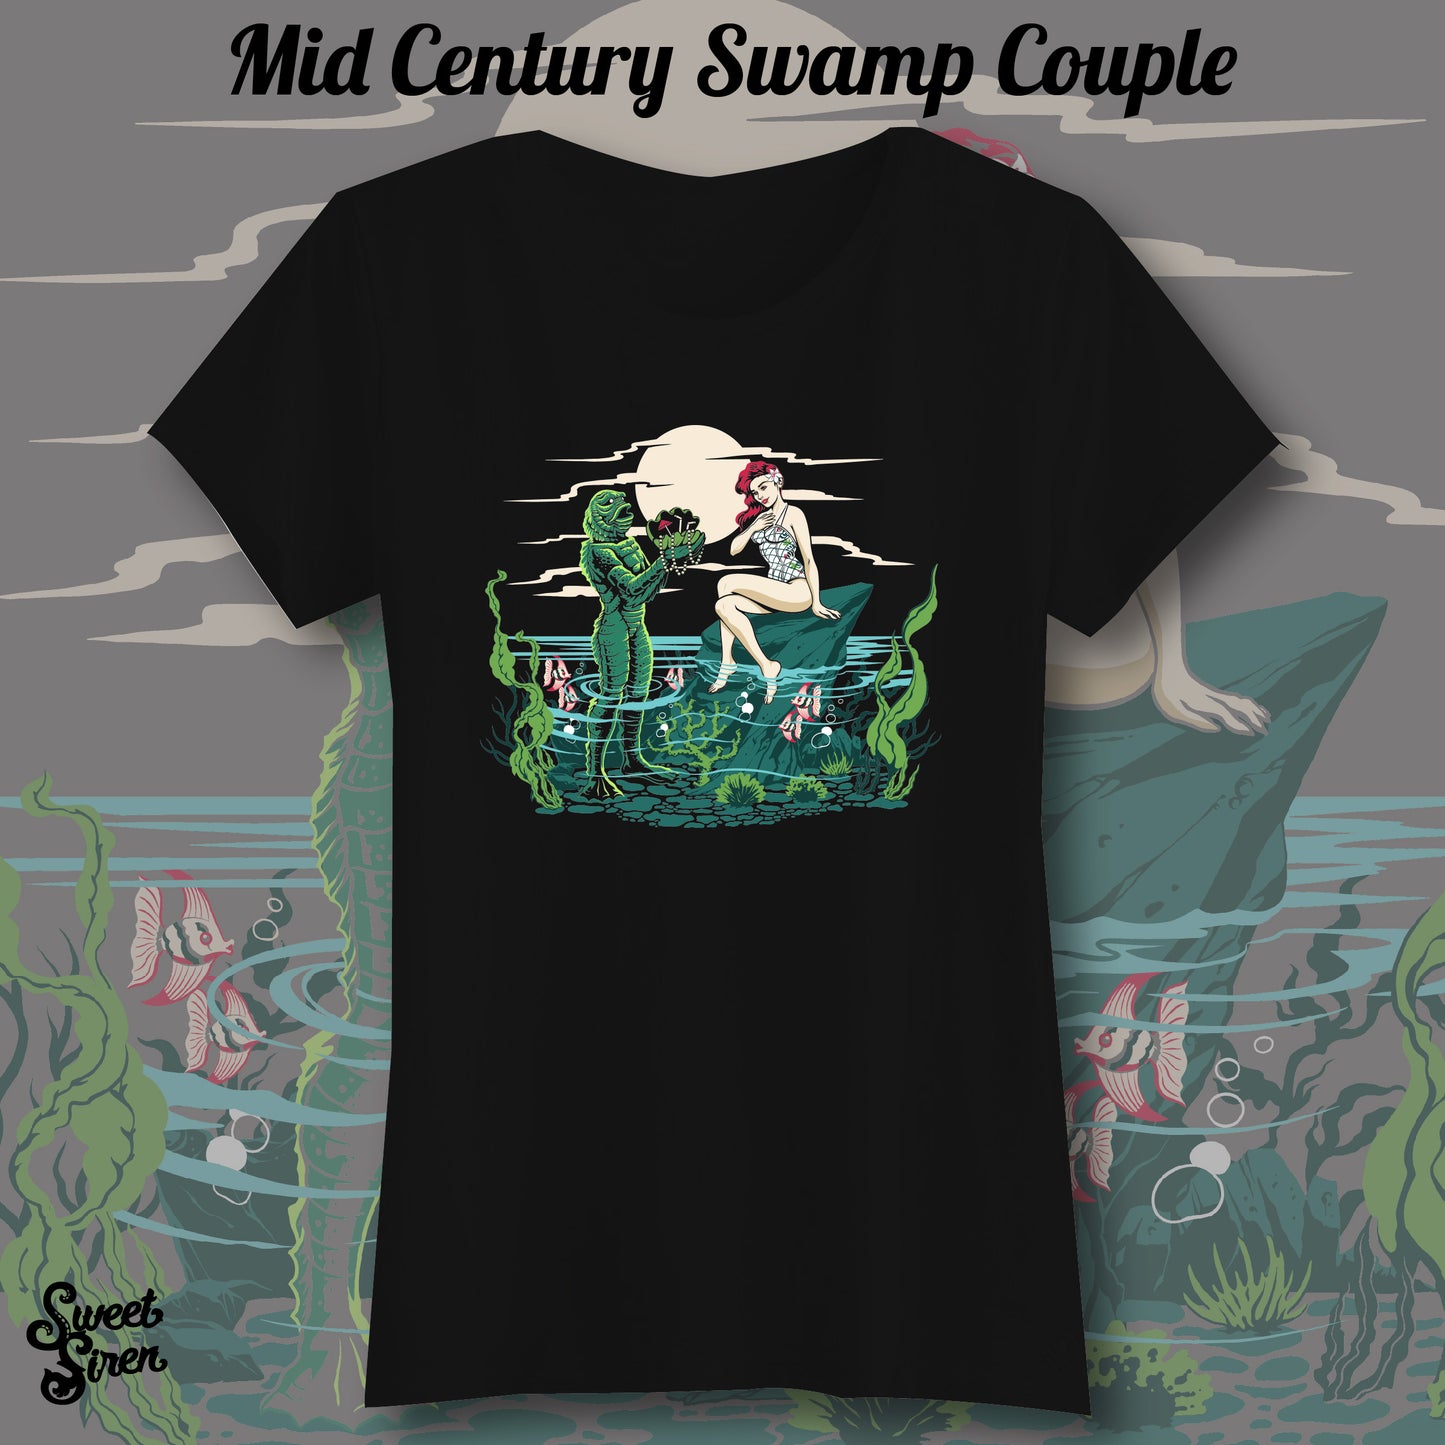 Mid Century Swamp Couple - Women's Tee